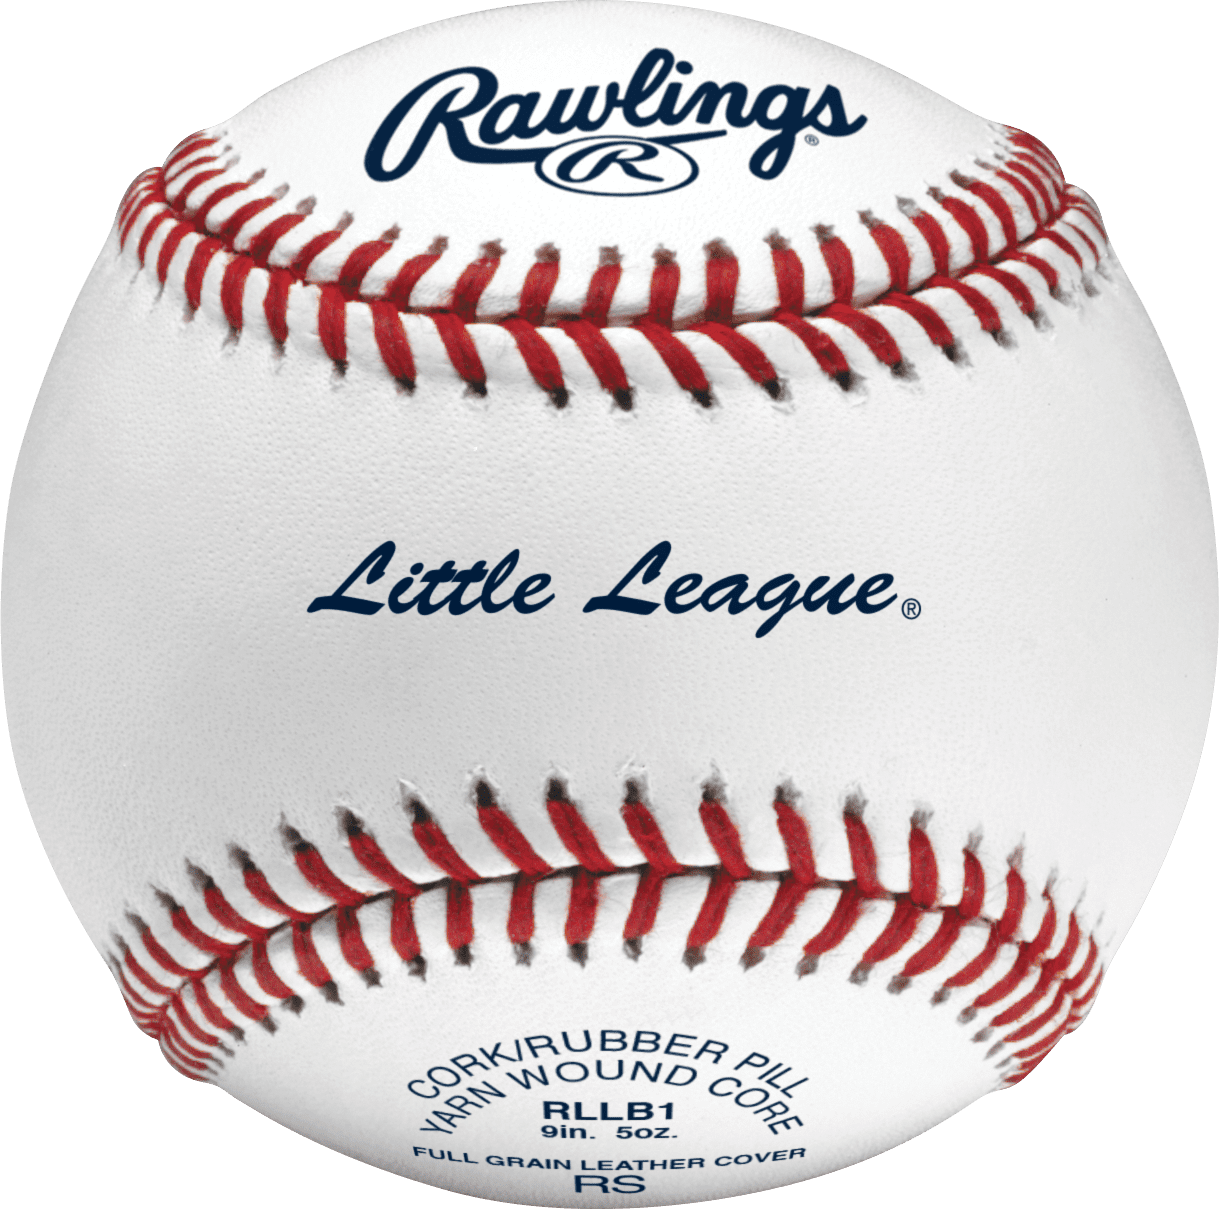 9" Soft Leather Sport Practice & Trainning Base Ball BaseBall Softball New RHTM 